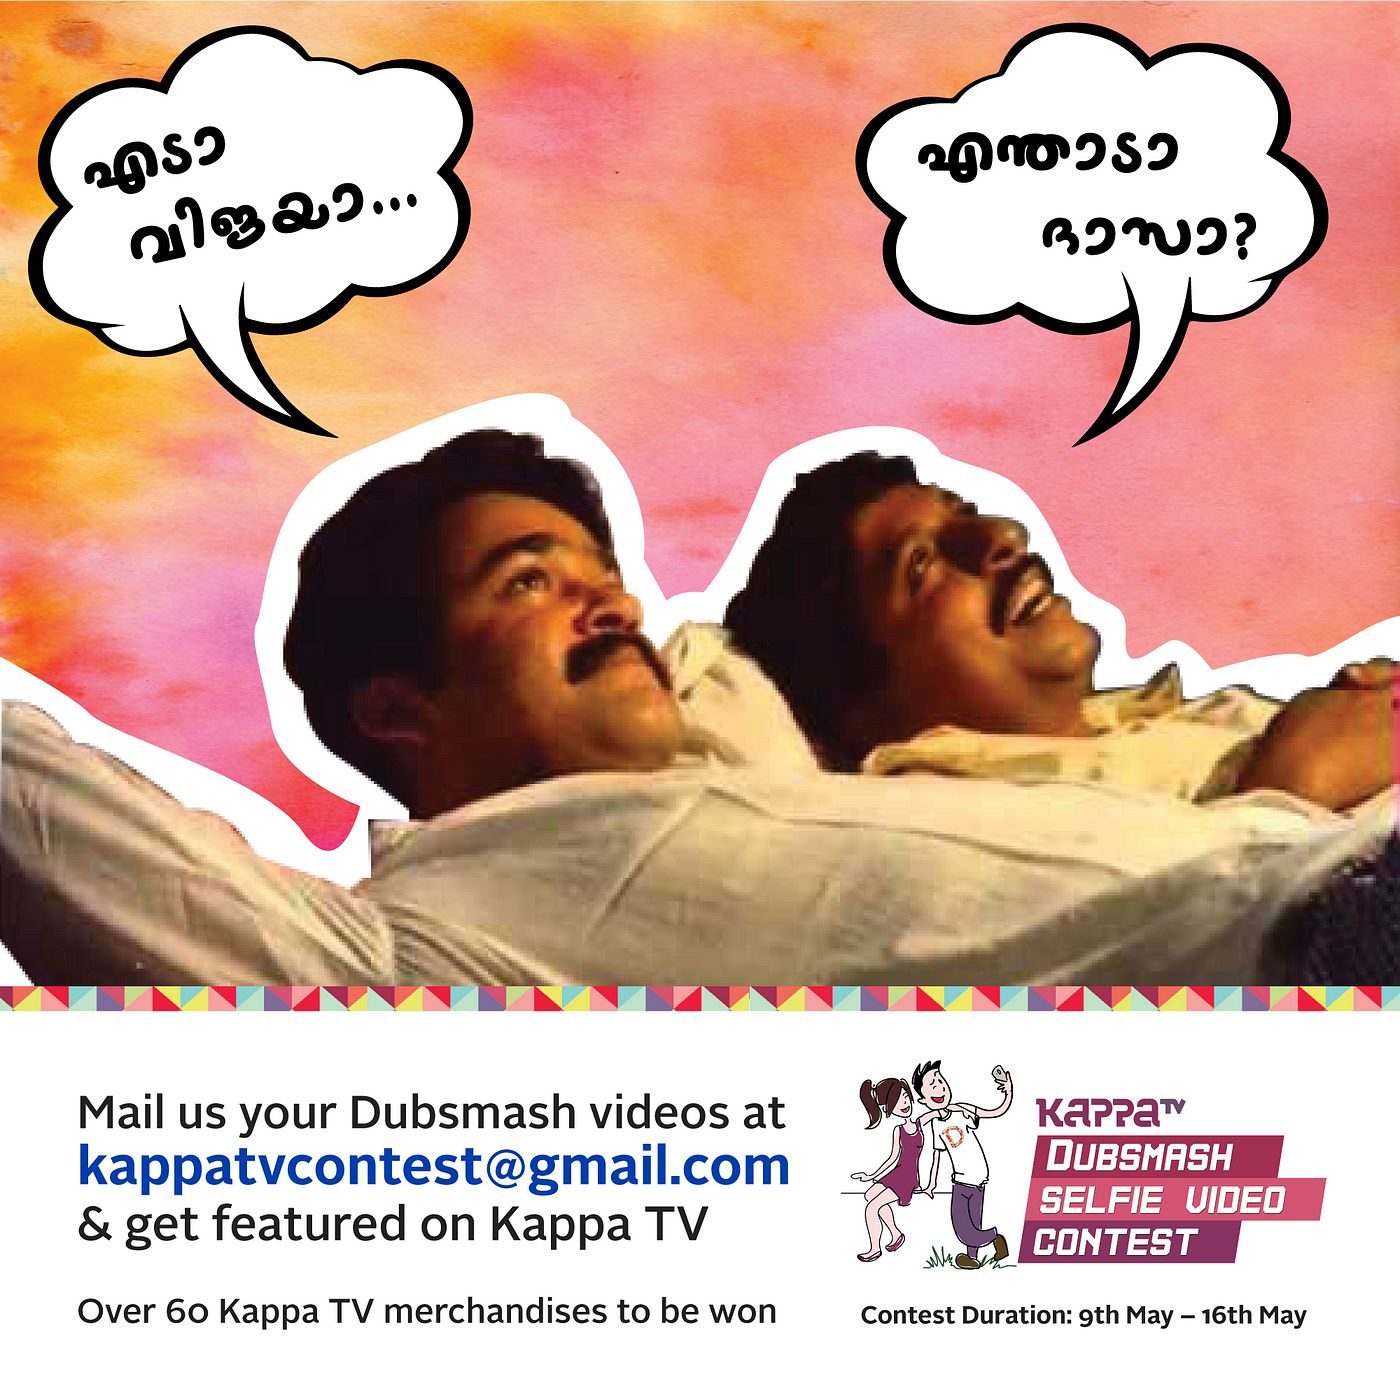 Kappa TV Dubsmash Video Selfie Contest — Terms & Conditions | by Kappa TV |  Medium